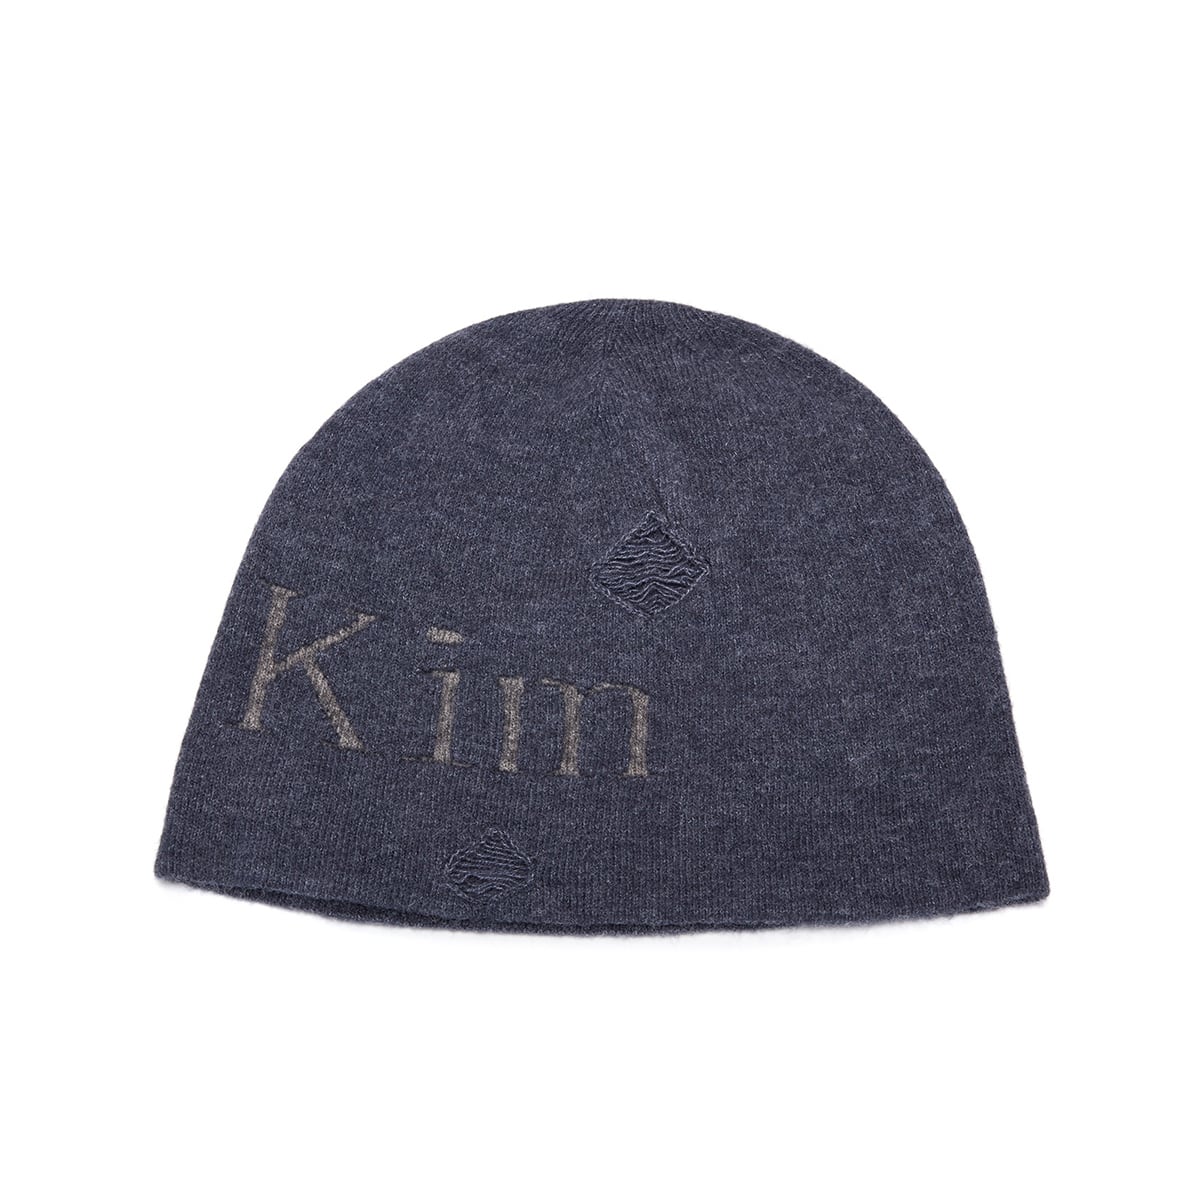 Matin Kim LOGO VINTAGE SHORT BEANIE WBMH134 マーティンキム ビーニー ニット帽 帽子 韓国ブランド